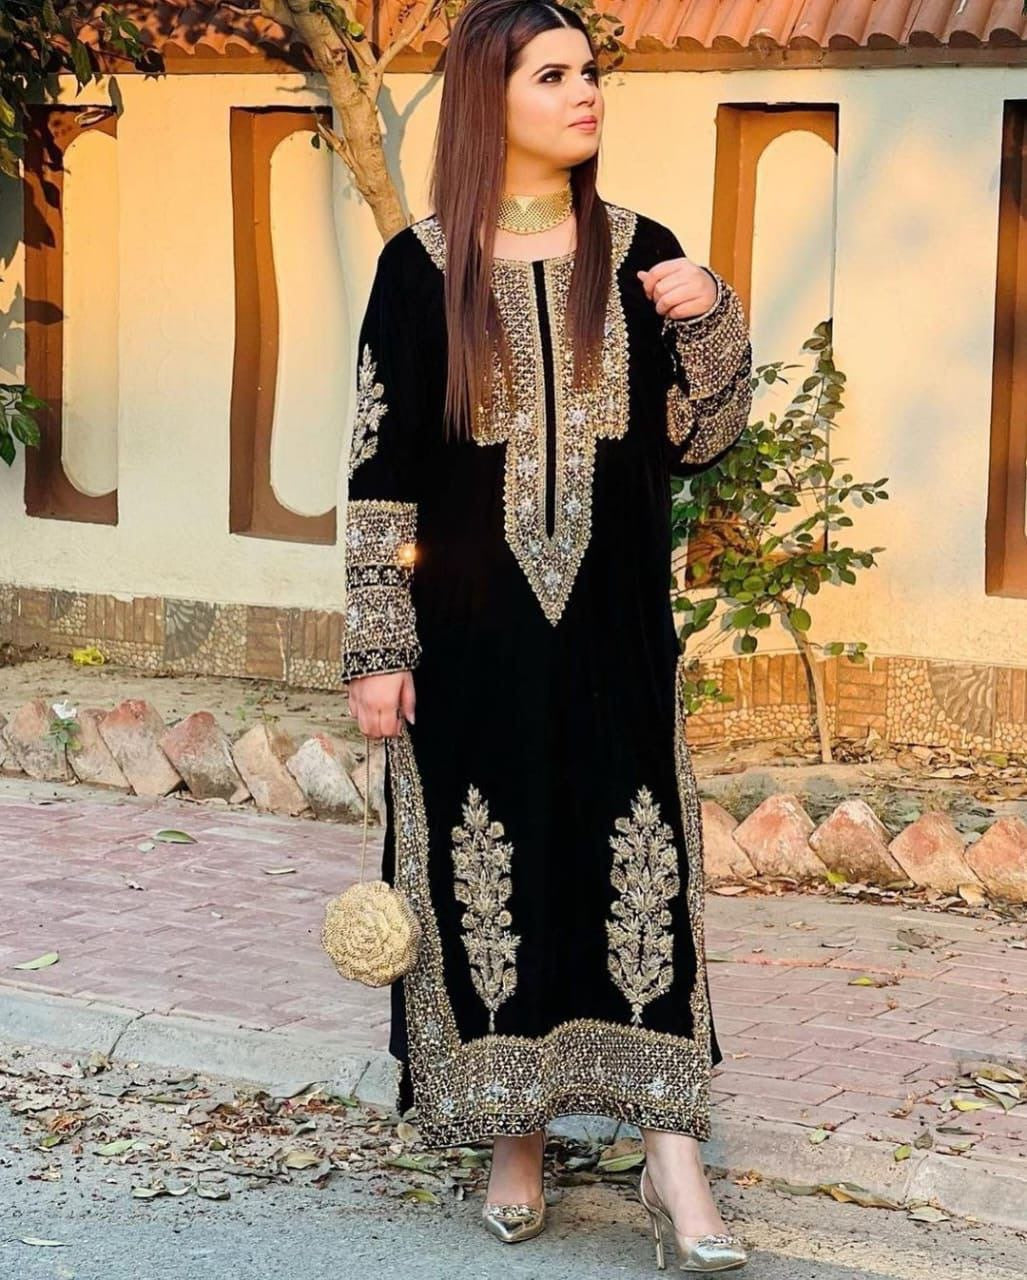 Laiba Am Vol 193 Festive Wear Pakistani Kurti Pant Dupatta New Designs